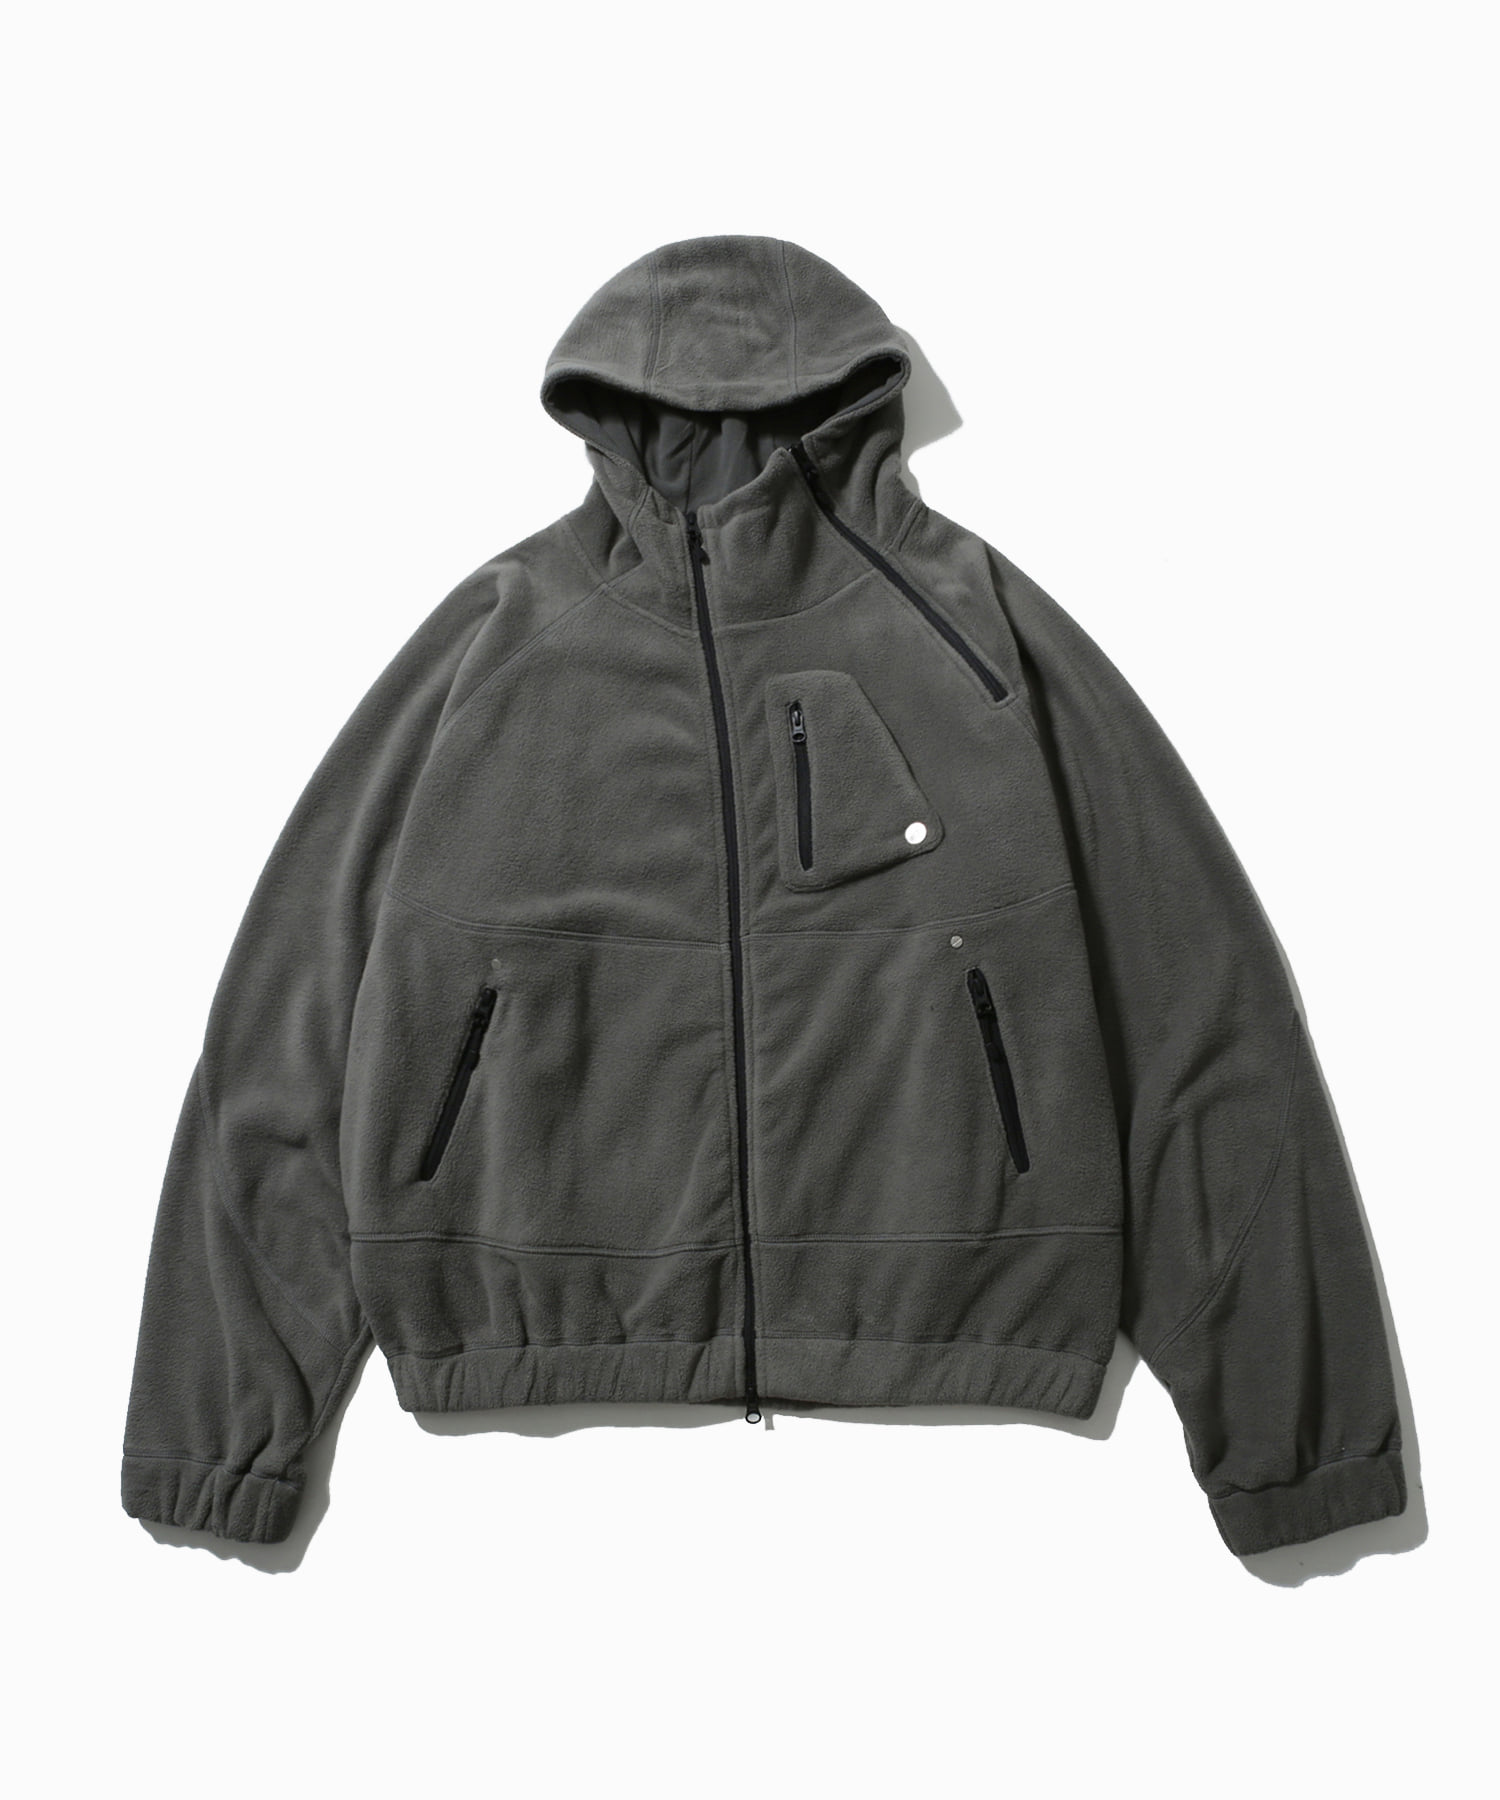 polar fleece asymmetric jacket khaki gray - 로어링라드(ROARINGRAD)